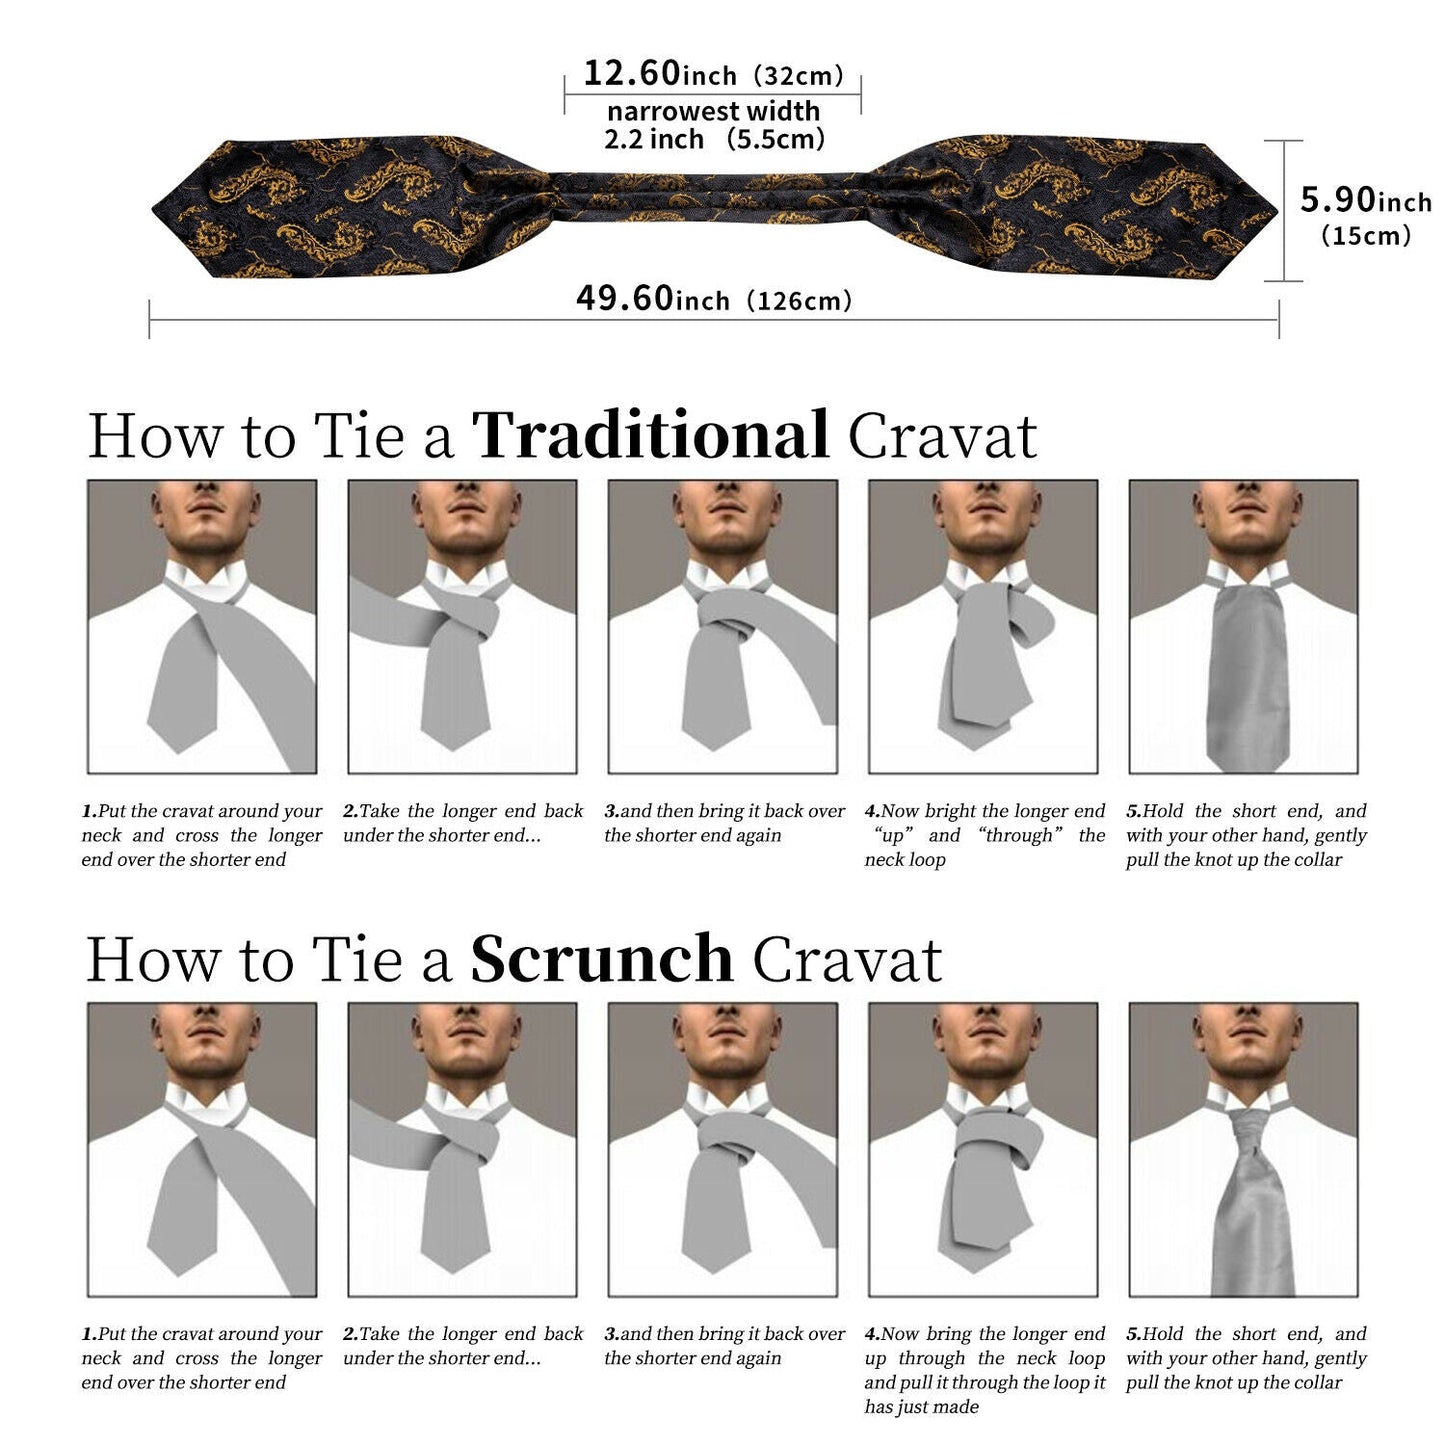 Victorian Ascot Silky Plain Satin Day Cravat Set [Royal Blue]